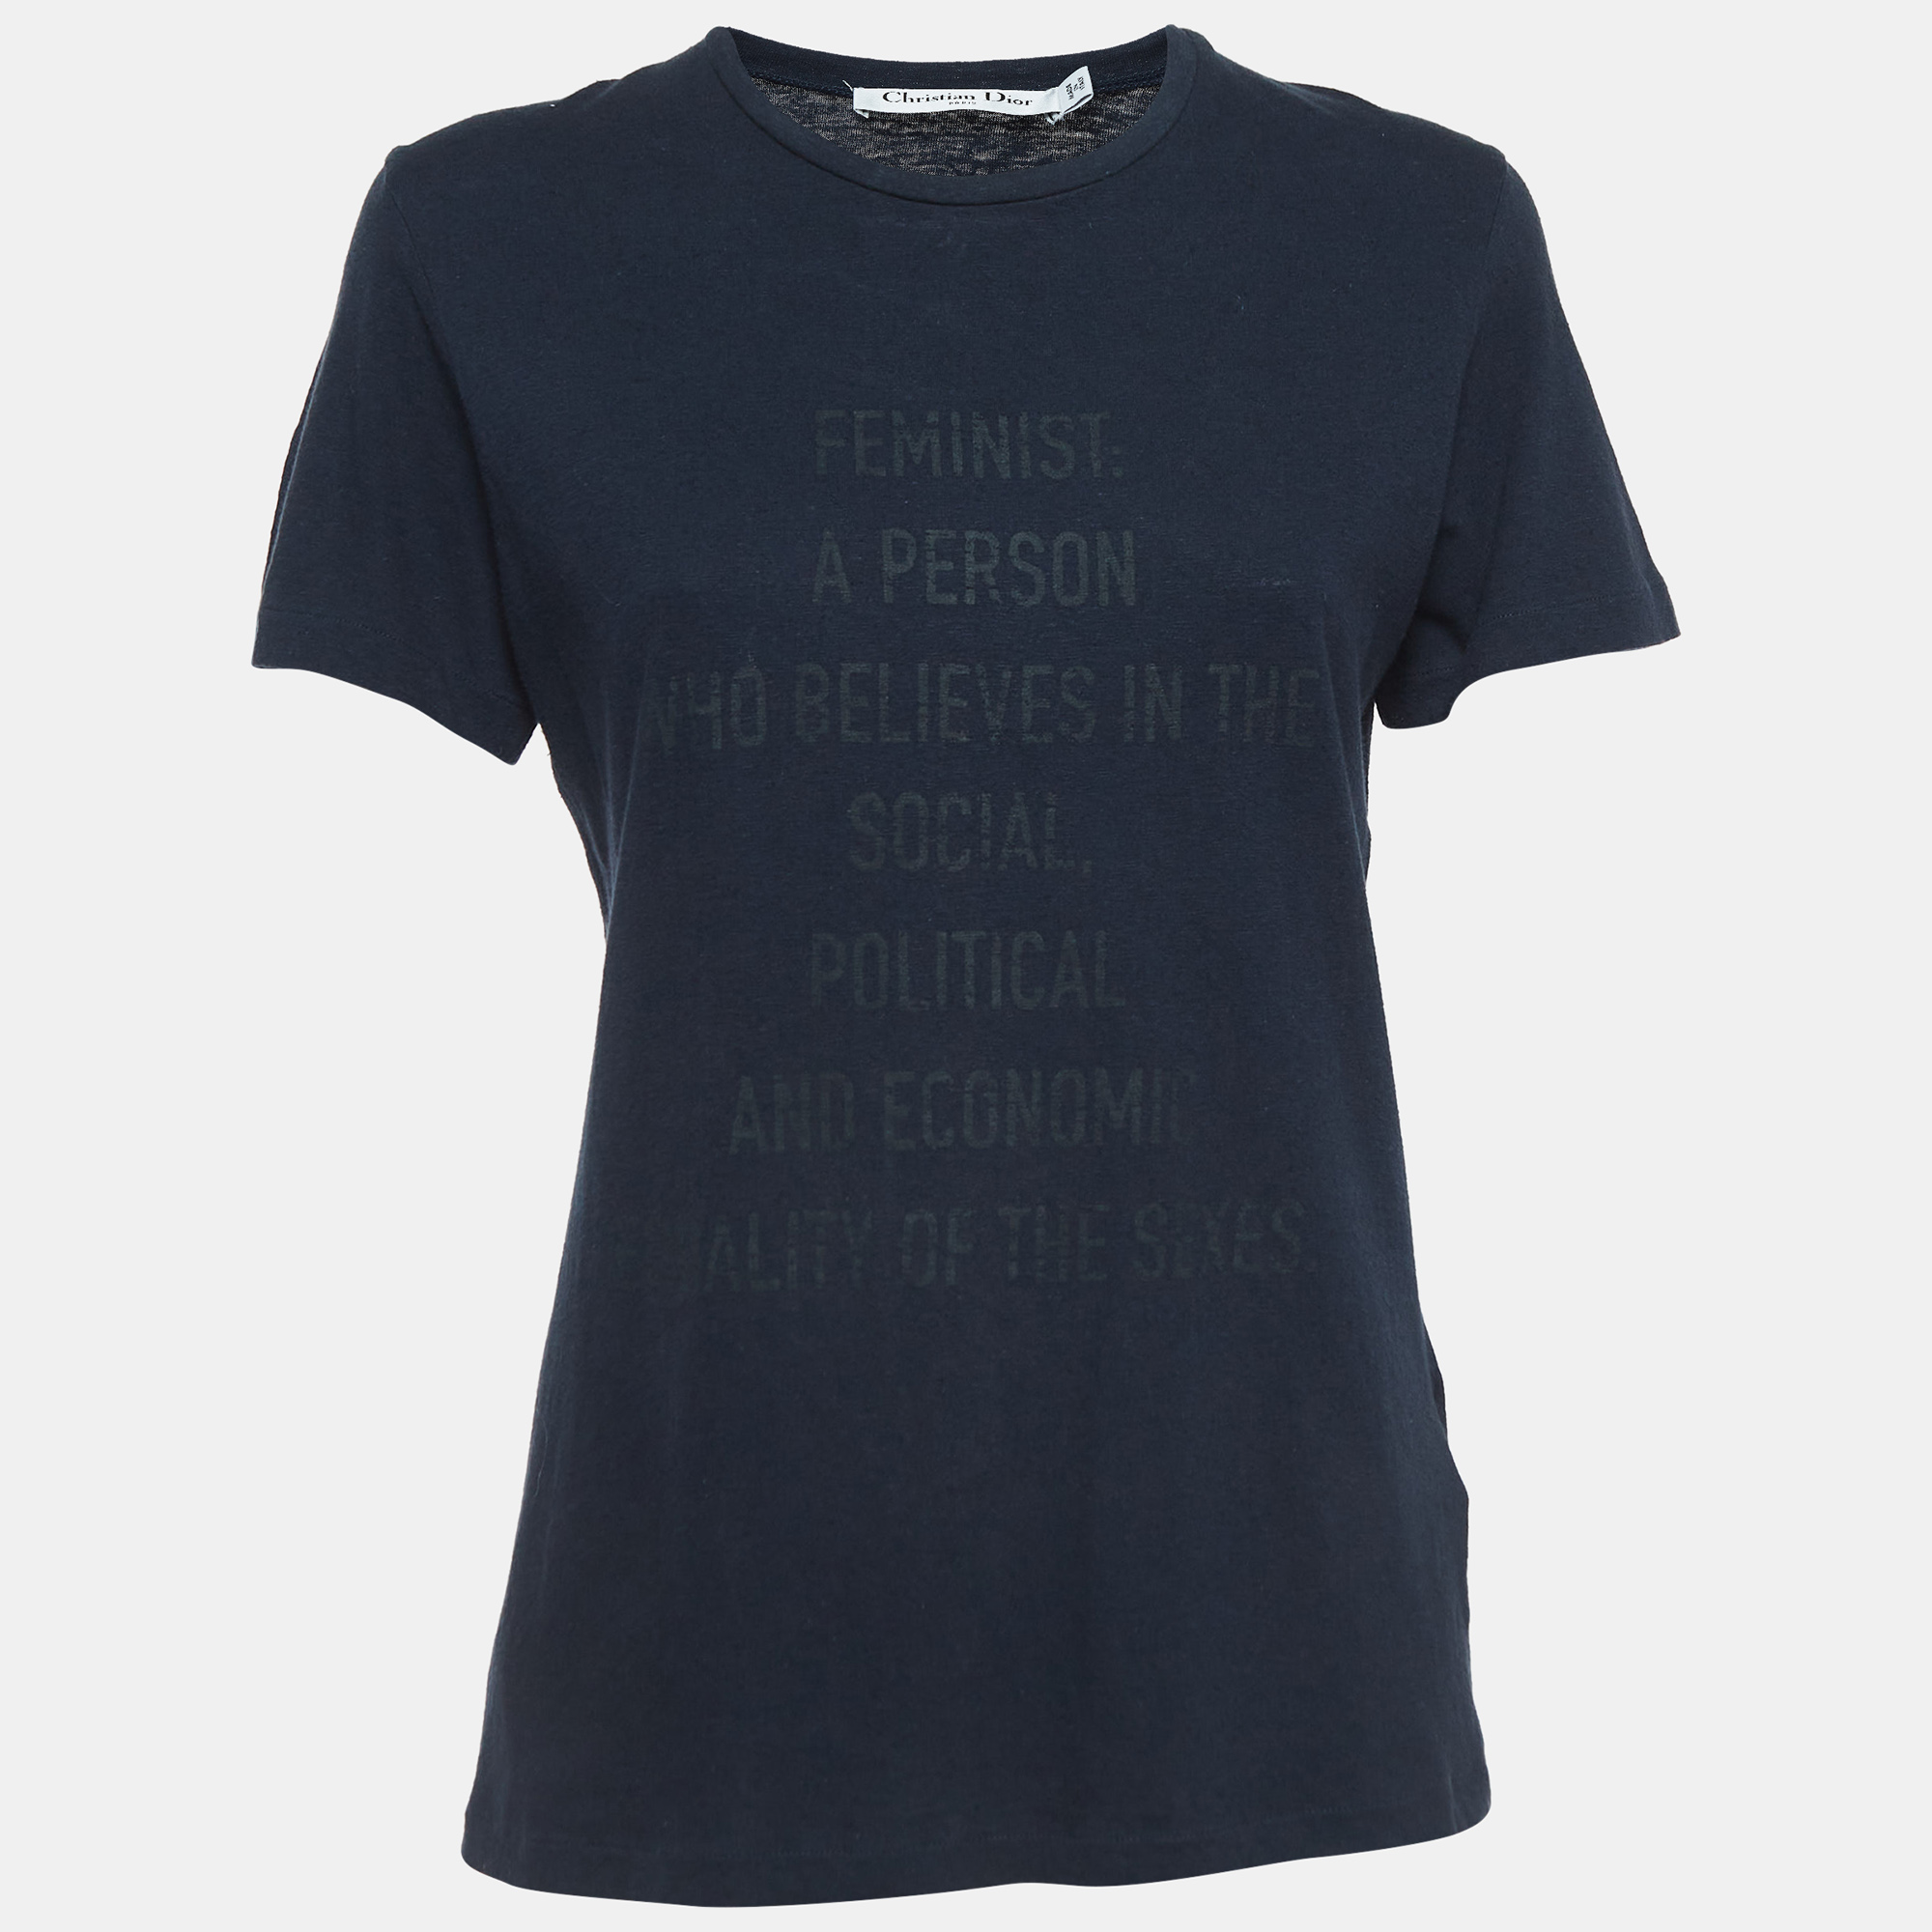 Christian dior navy blue feminist print cotton blend half sleeve t-shirt s